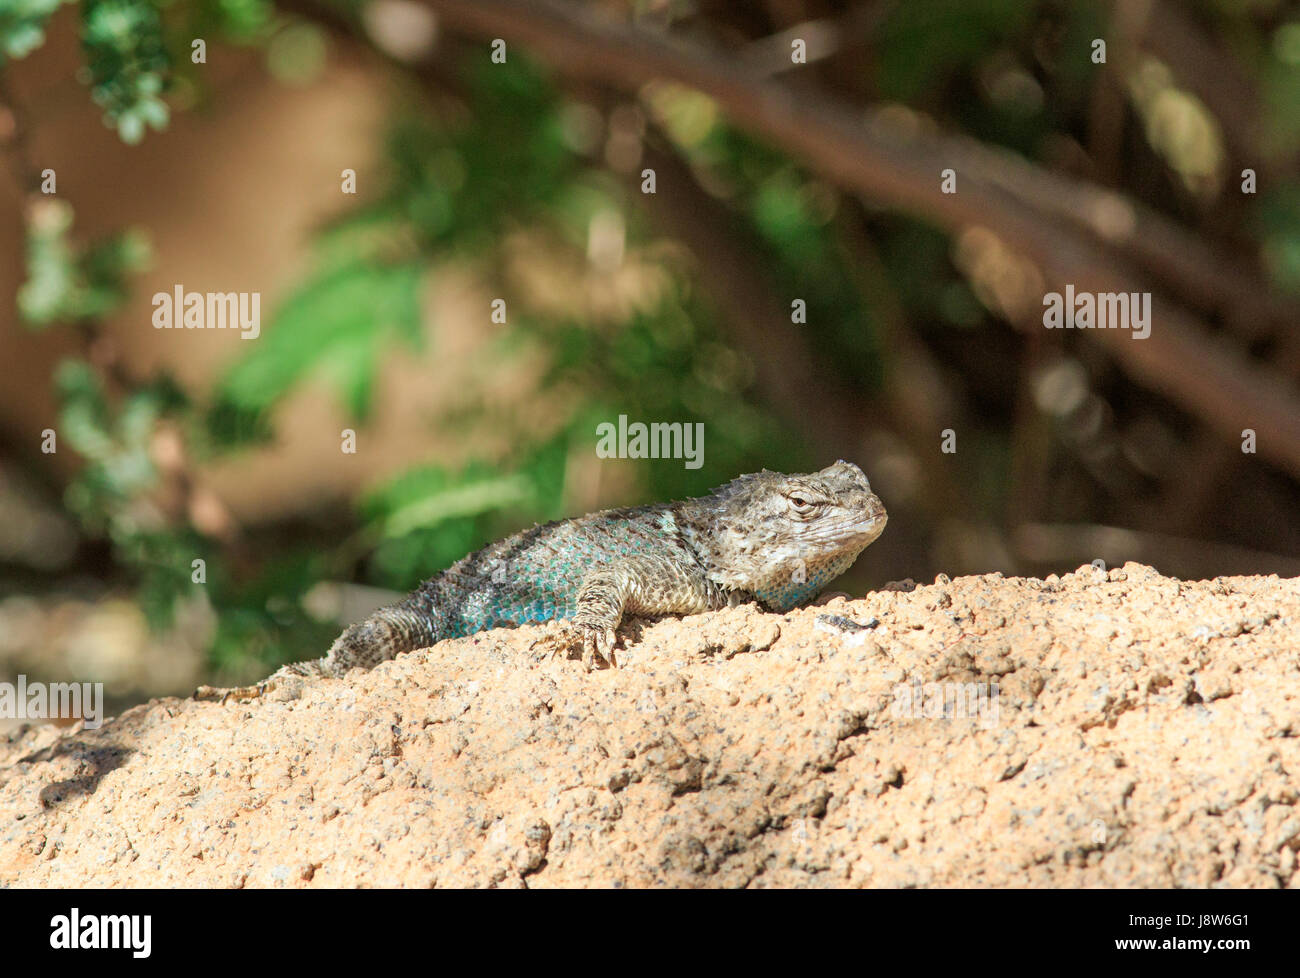 Clark's Spiny Lizard (Sceloporus clarkii) on a rock. Stock Photo